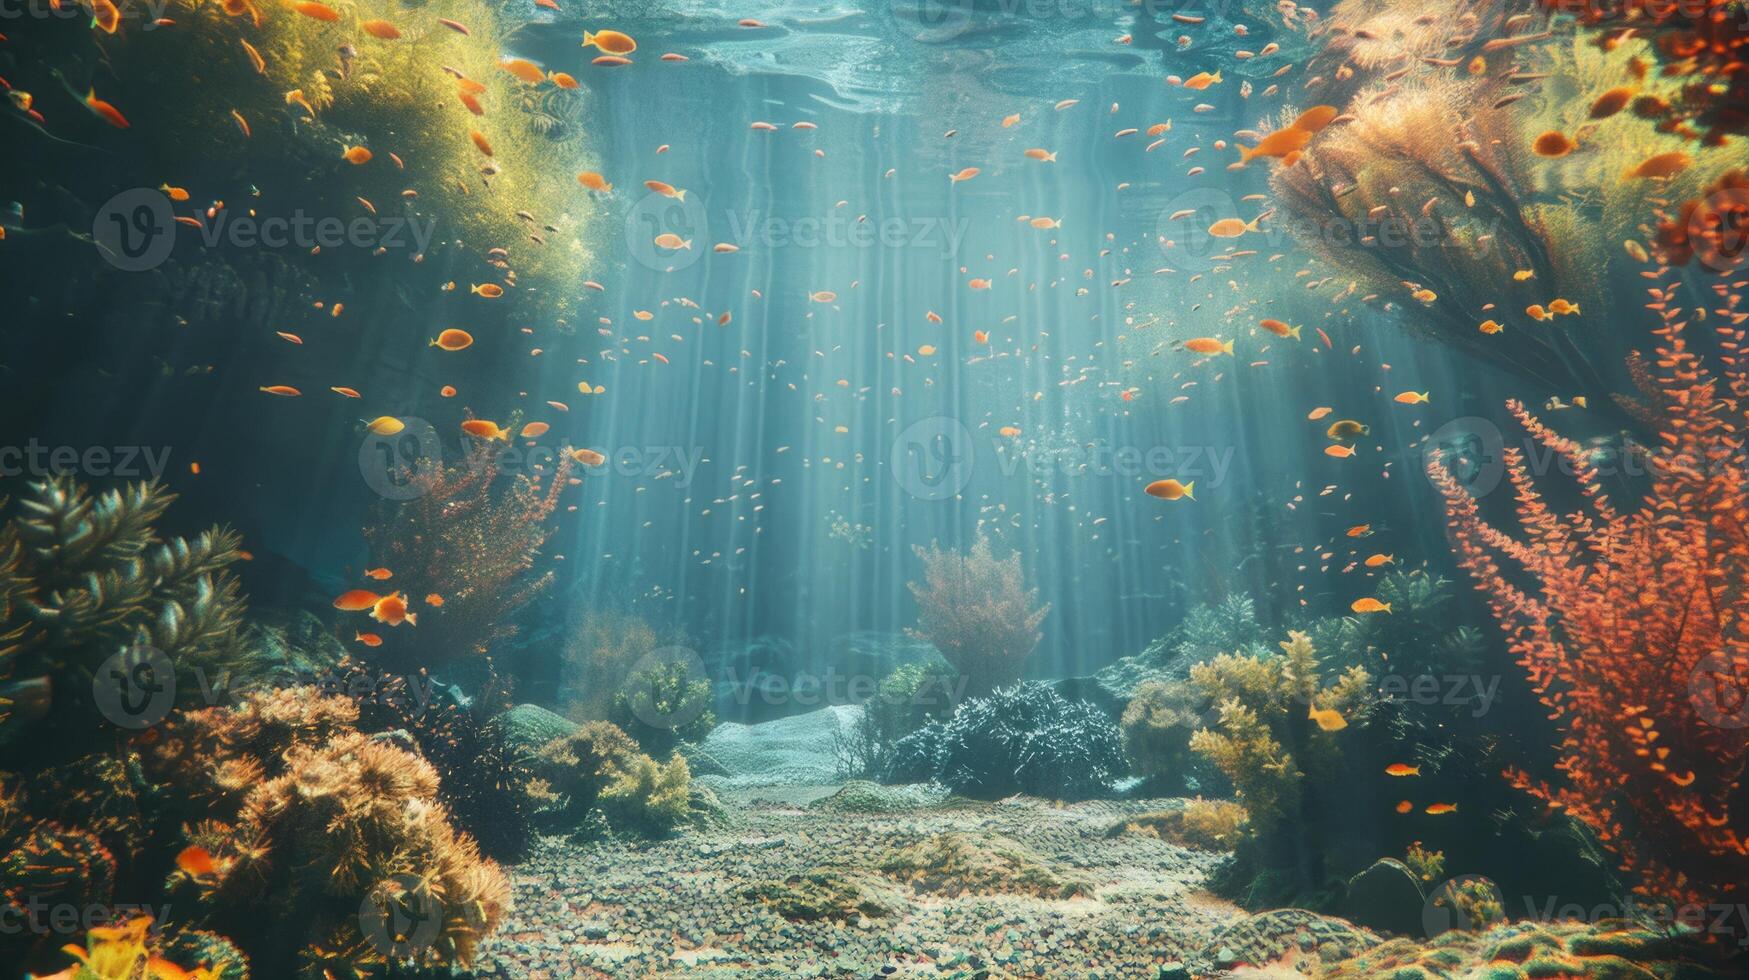 Retro style marine landscape with underwater view photo